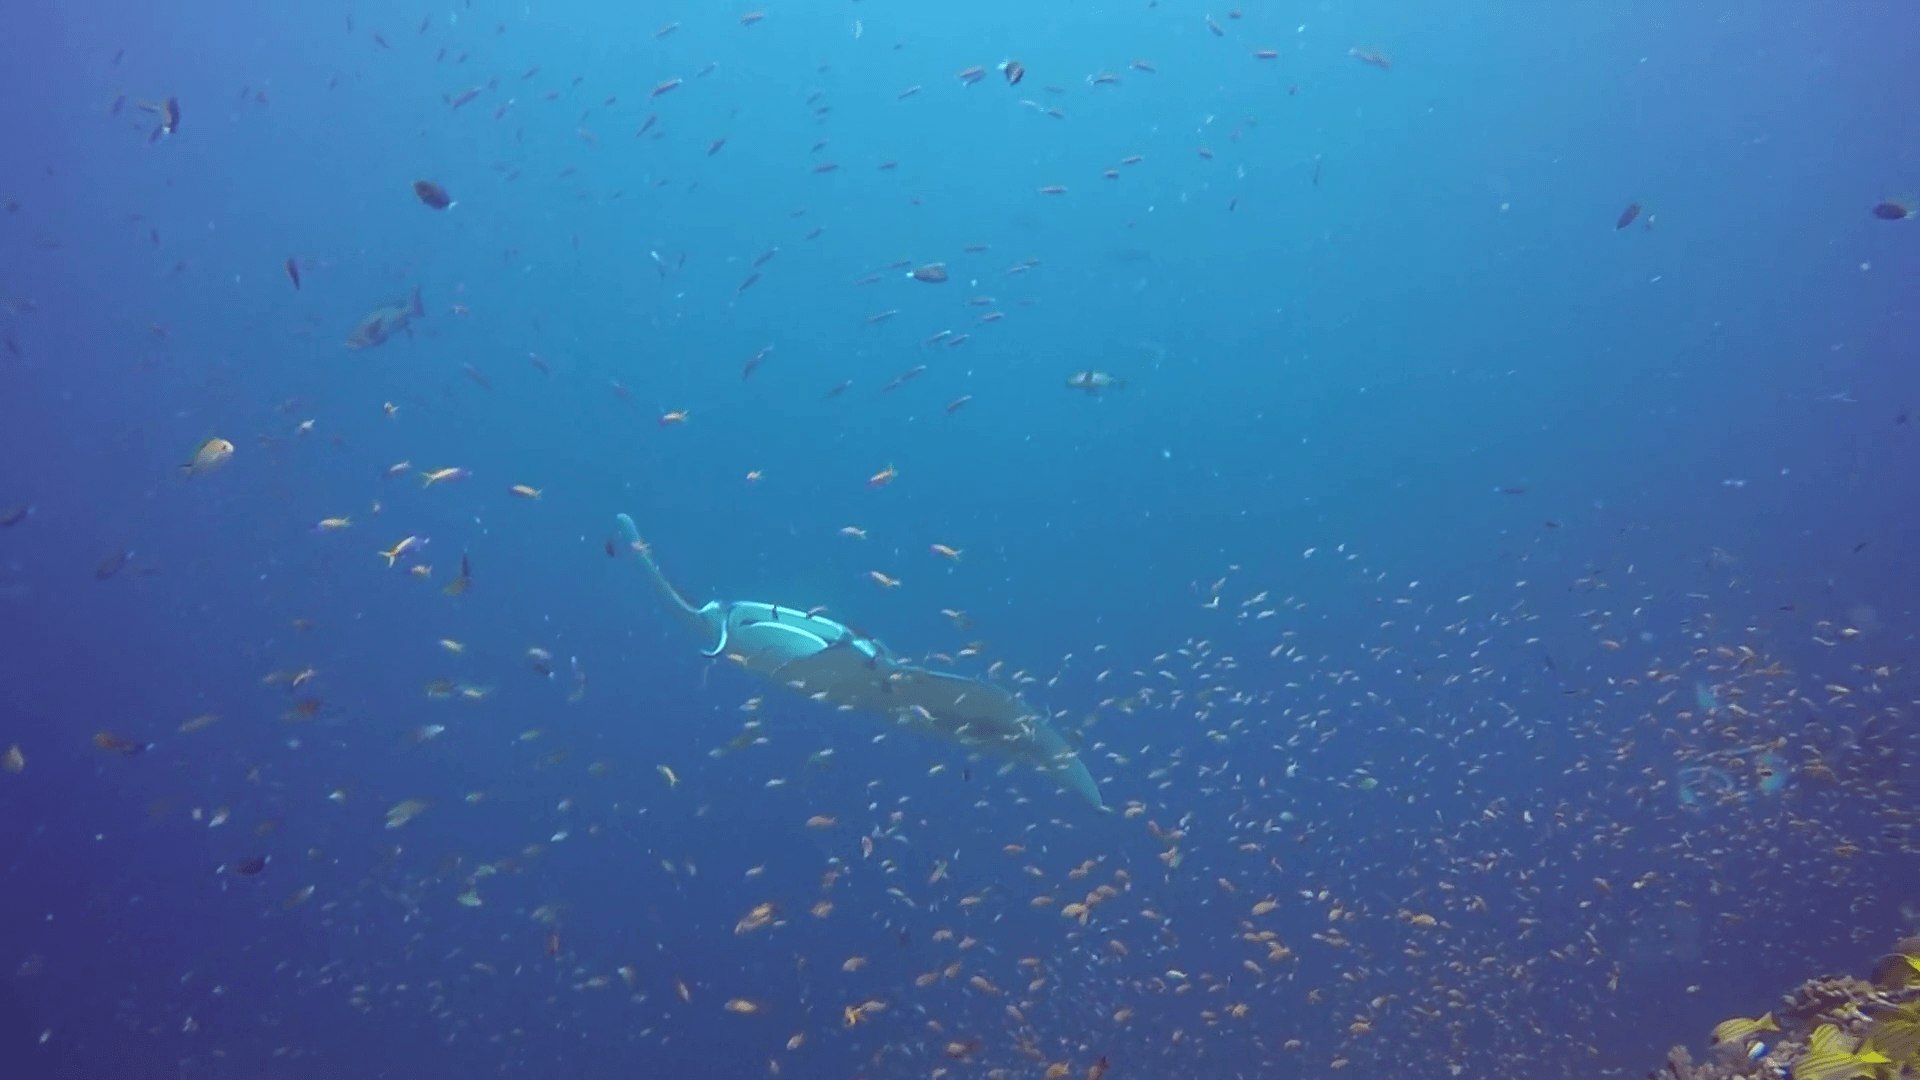 Manta ray relax on background of underwater school fish in ocean